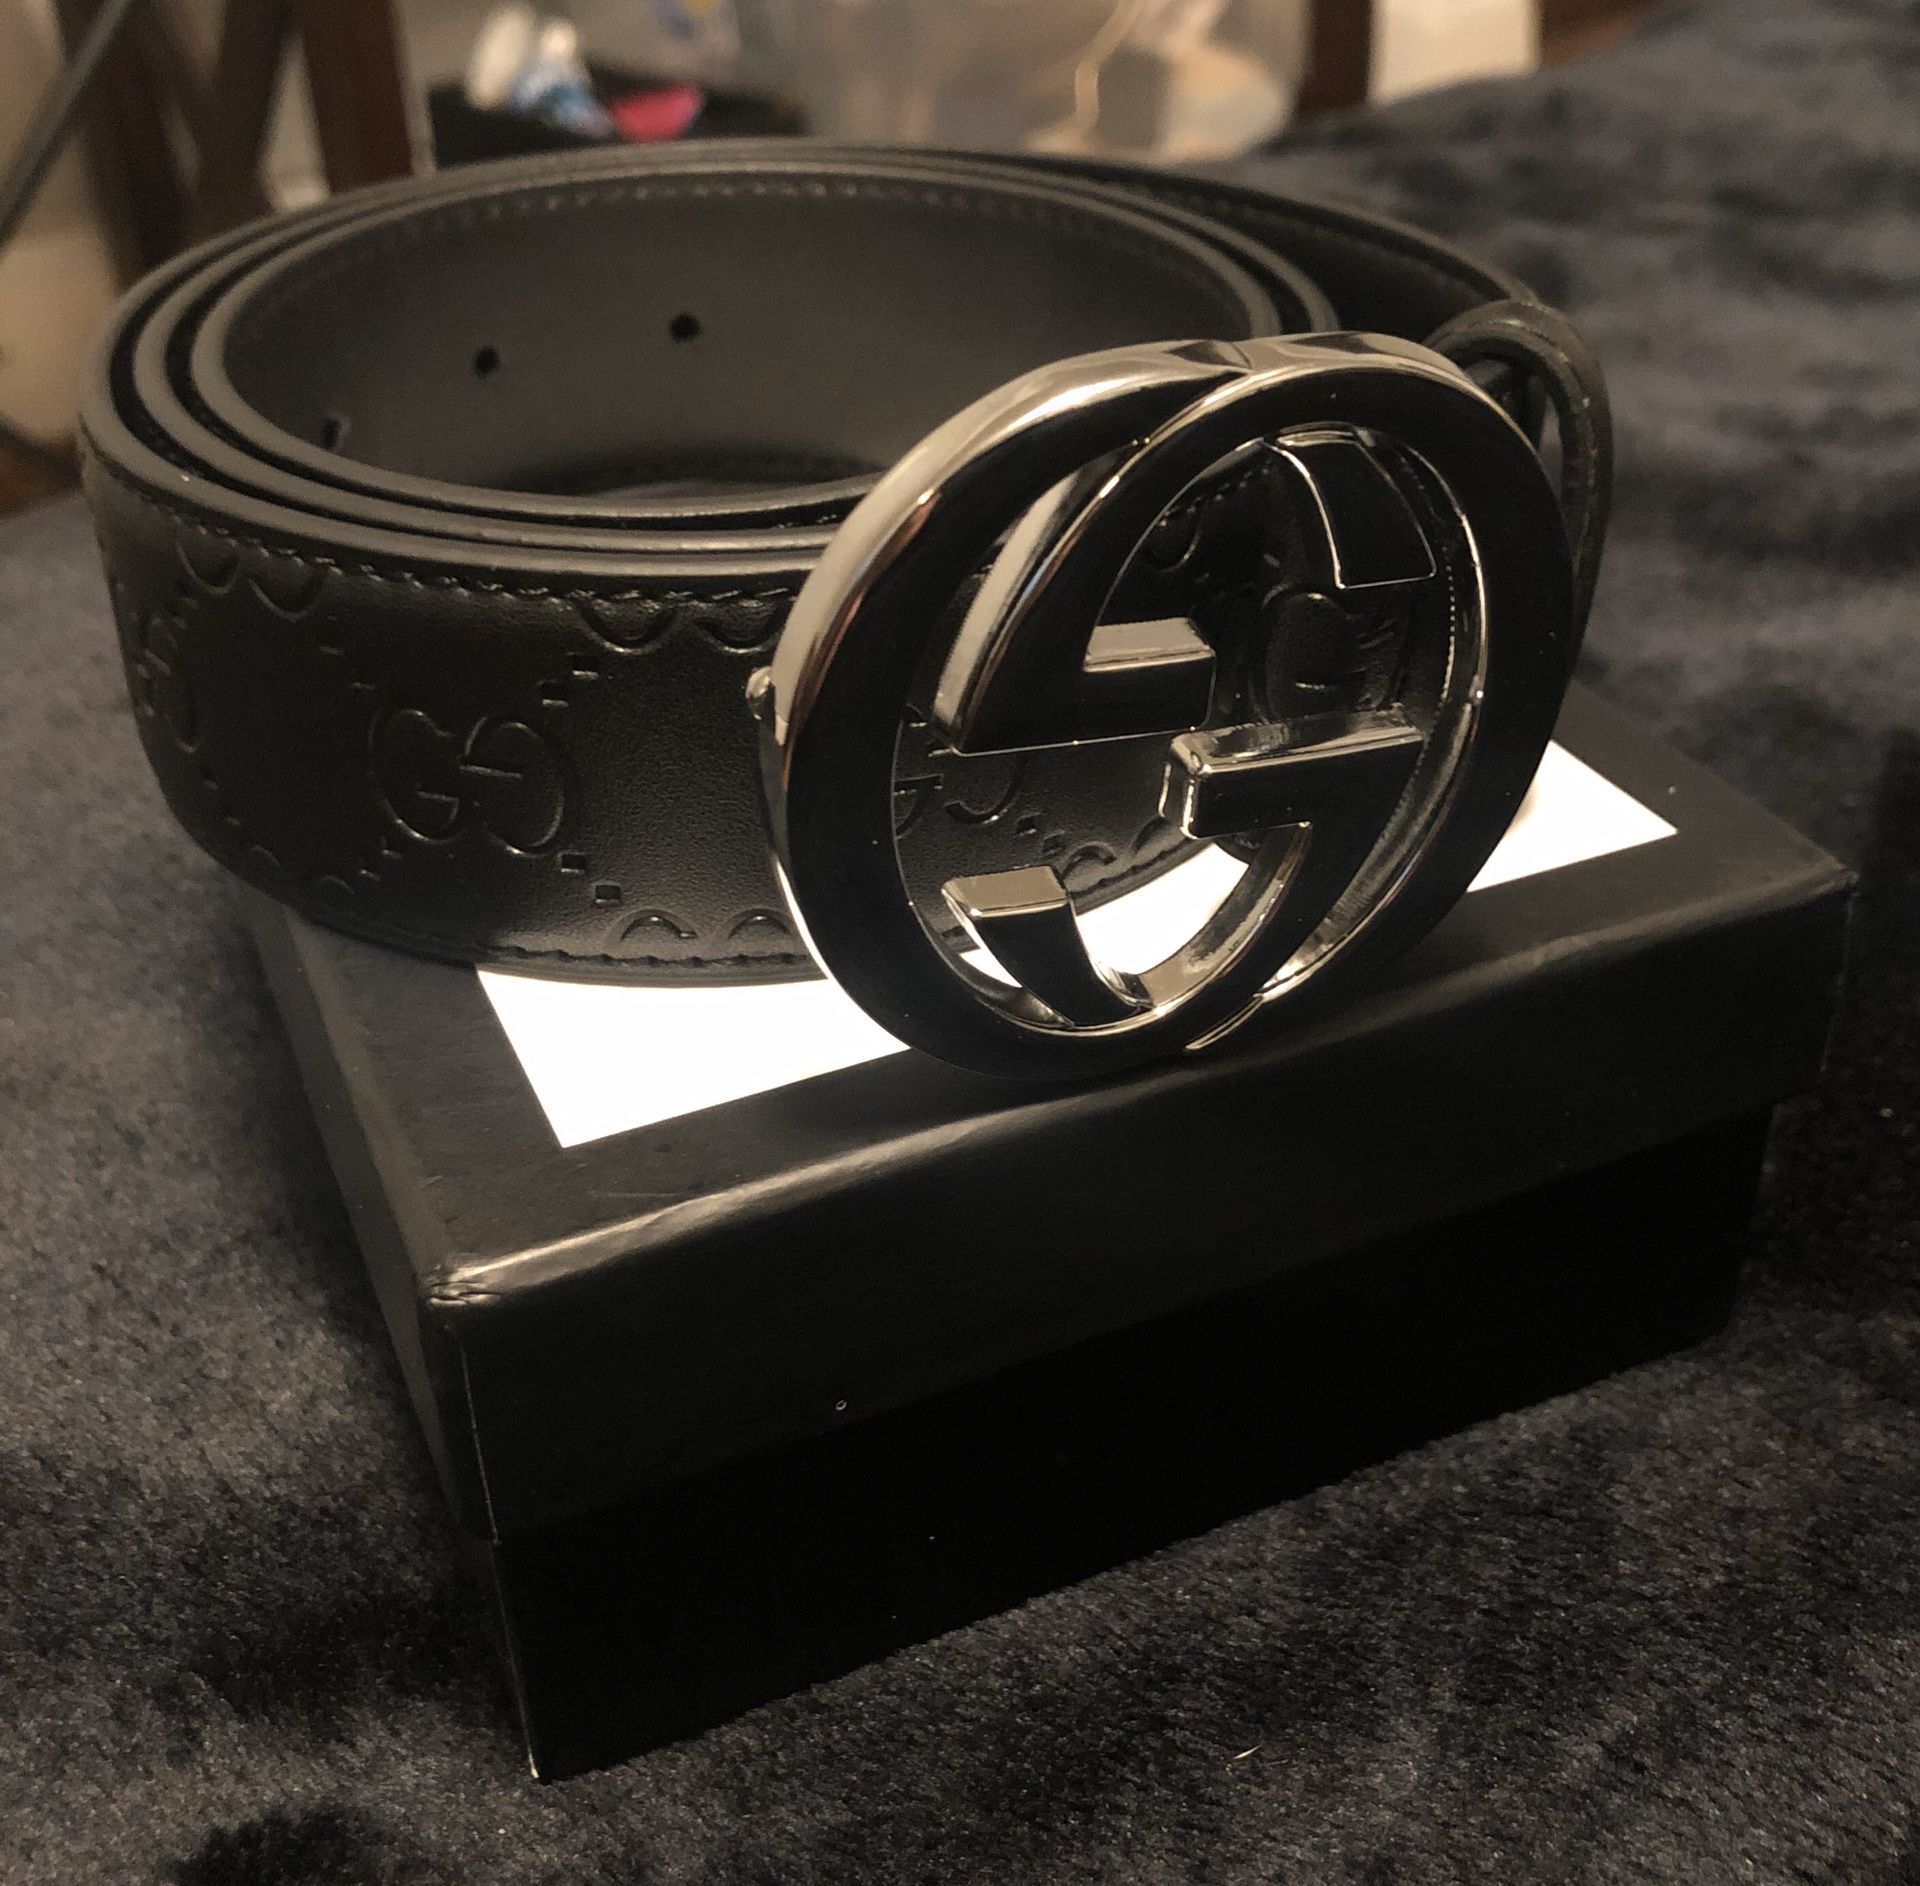 New in box Gucci “Guccisma” black leather men’s designer belt silver buckle size 30-34